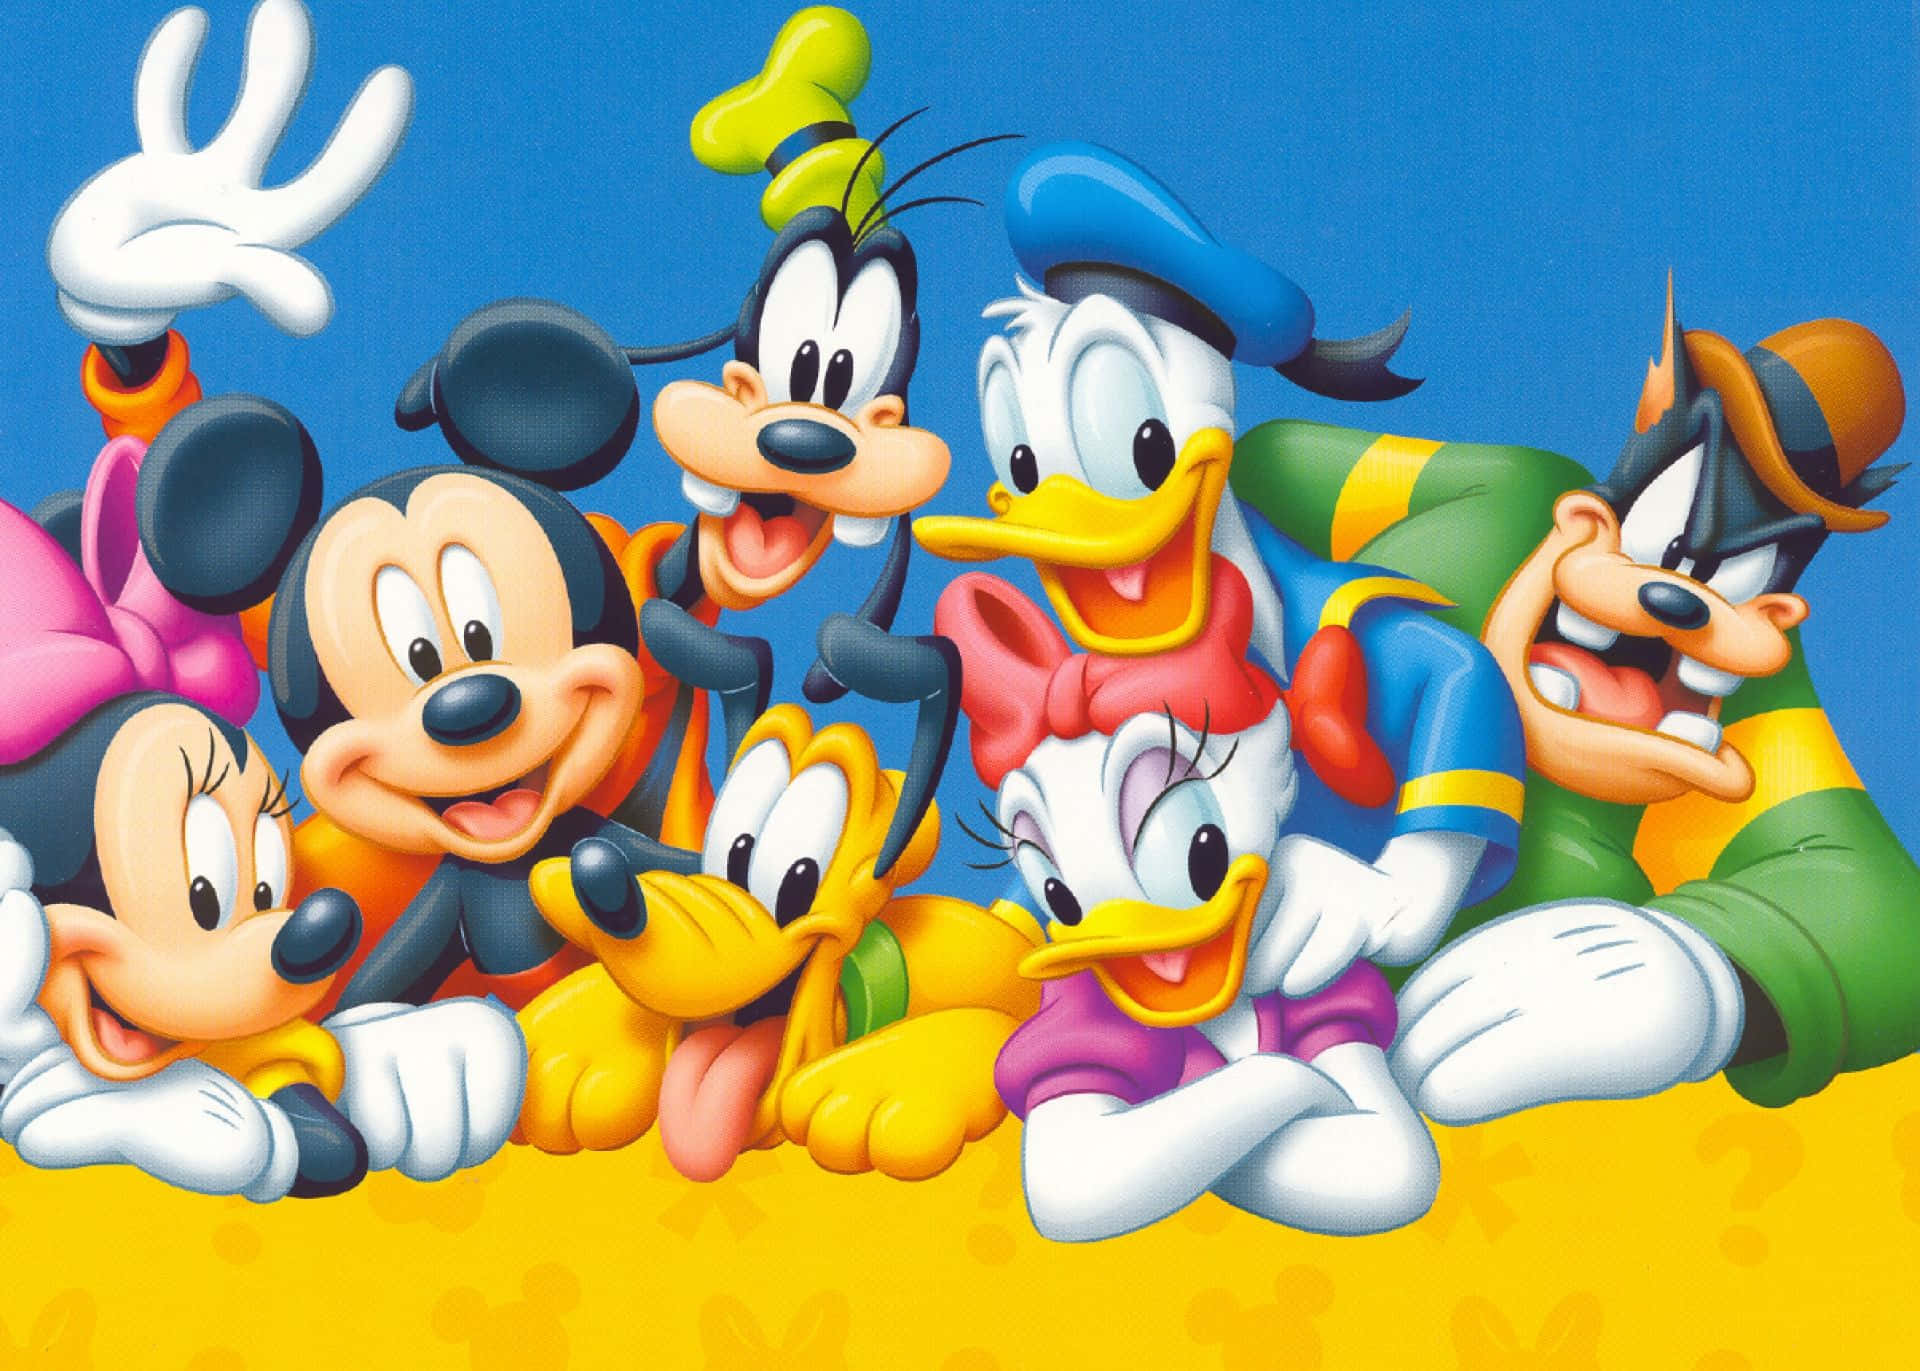 Lustigesdisney-bild Mit Mickey-mouse-charakteren